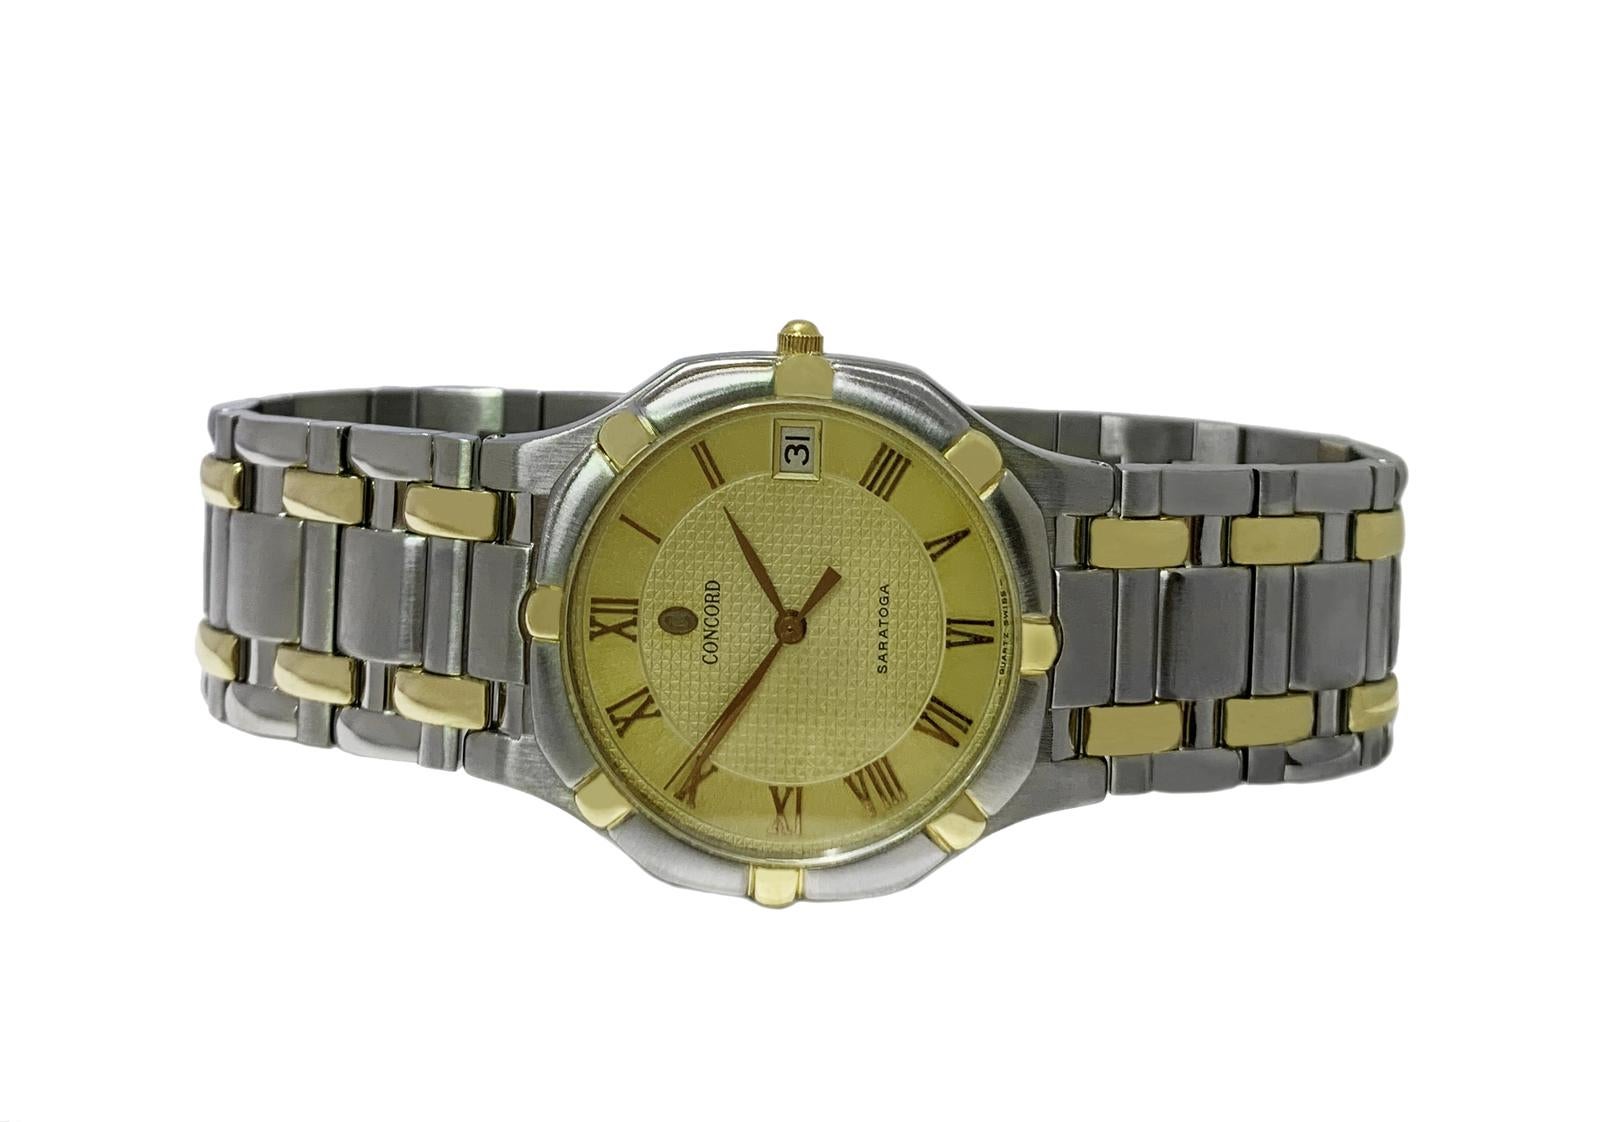 concord saratoga 18k gold mens watch